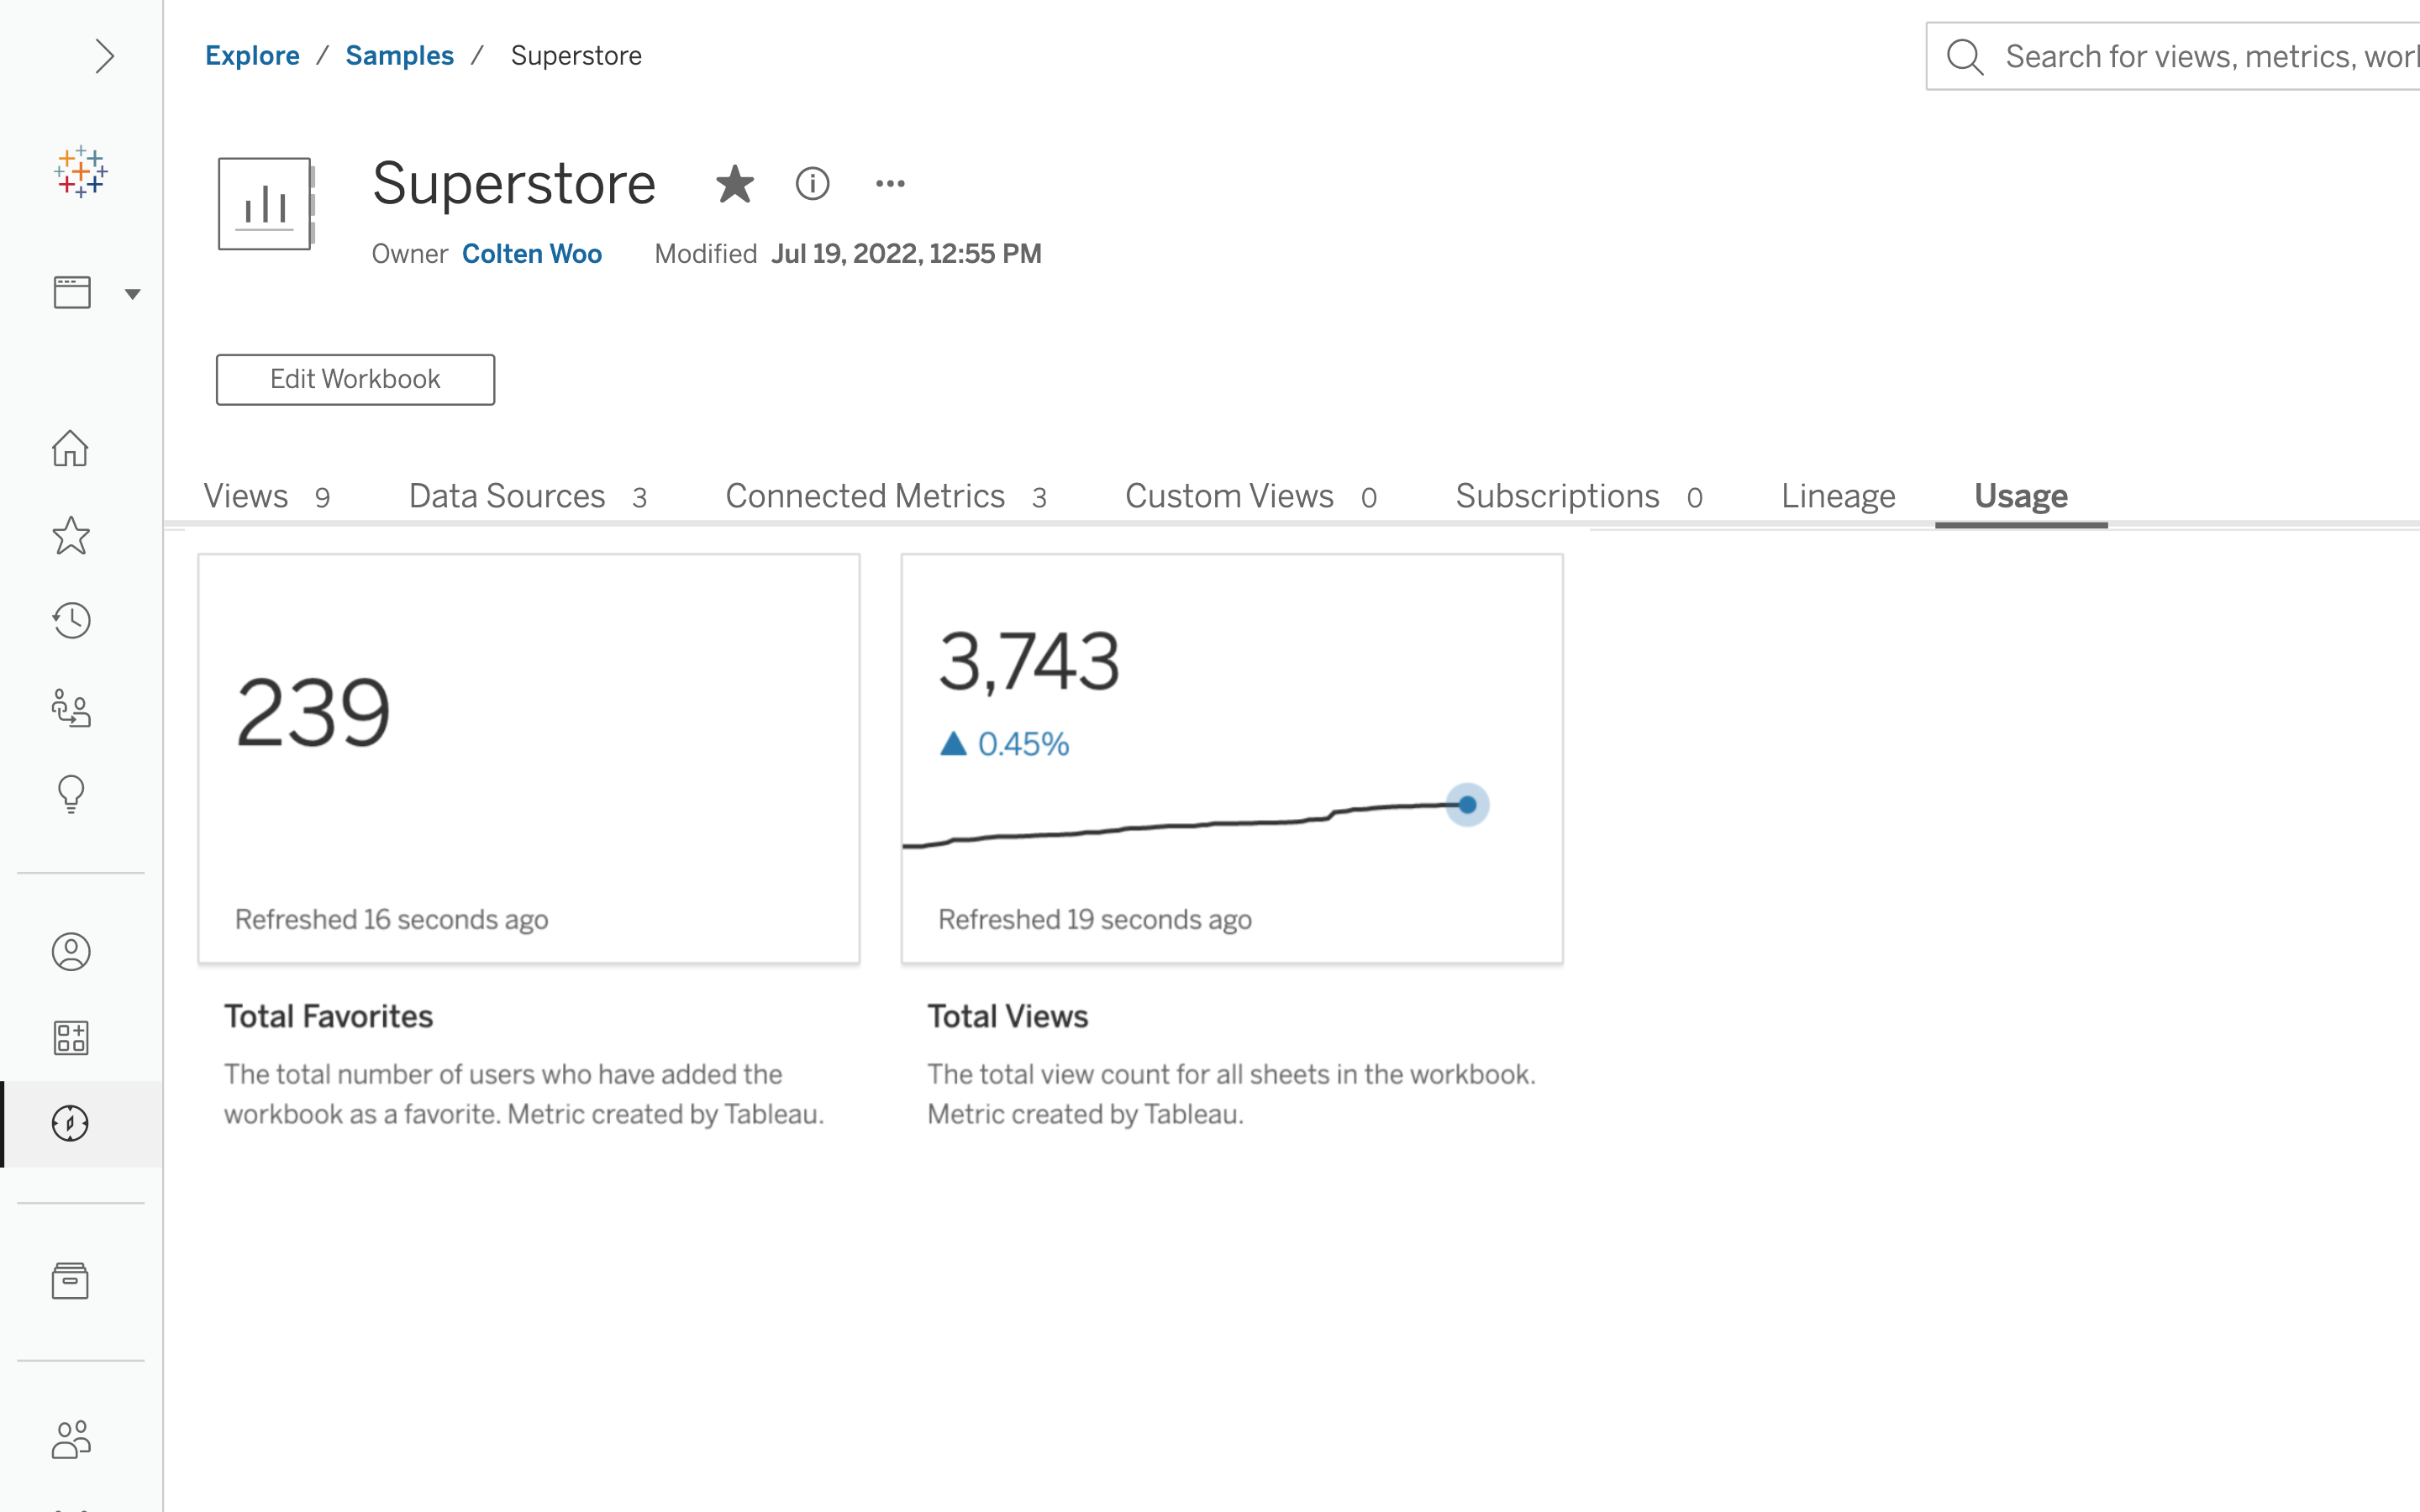 Screenshot of usage metrics in Tableau showing 239 total favorites and 3743 total views